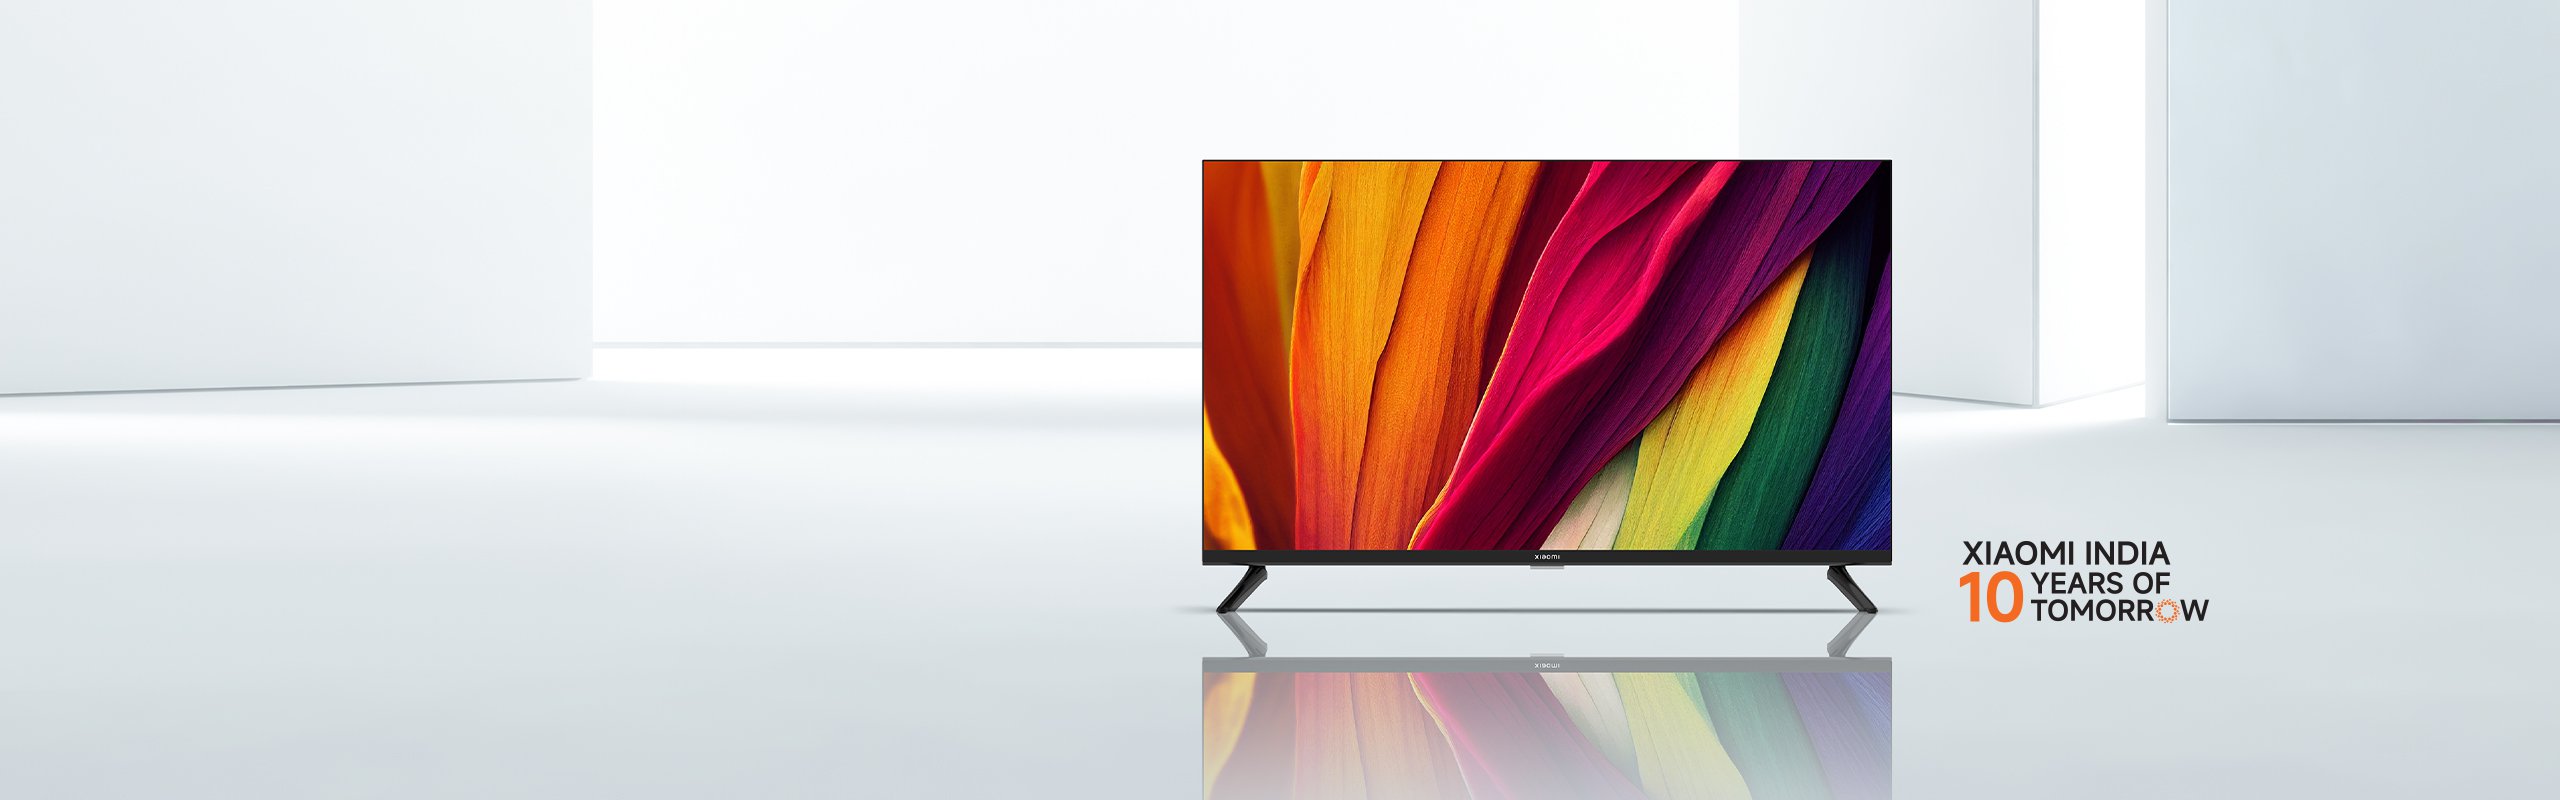 Xiaomi Smart TV A 32 2024 Edition